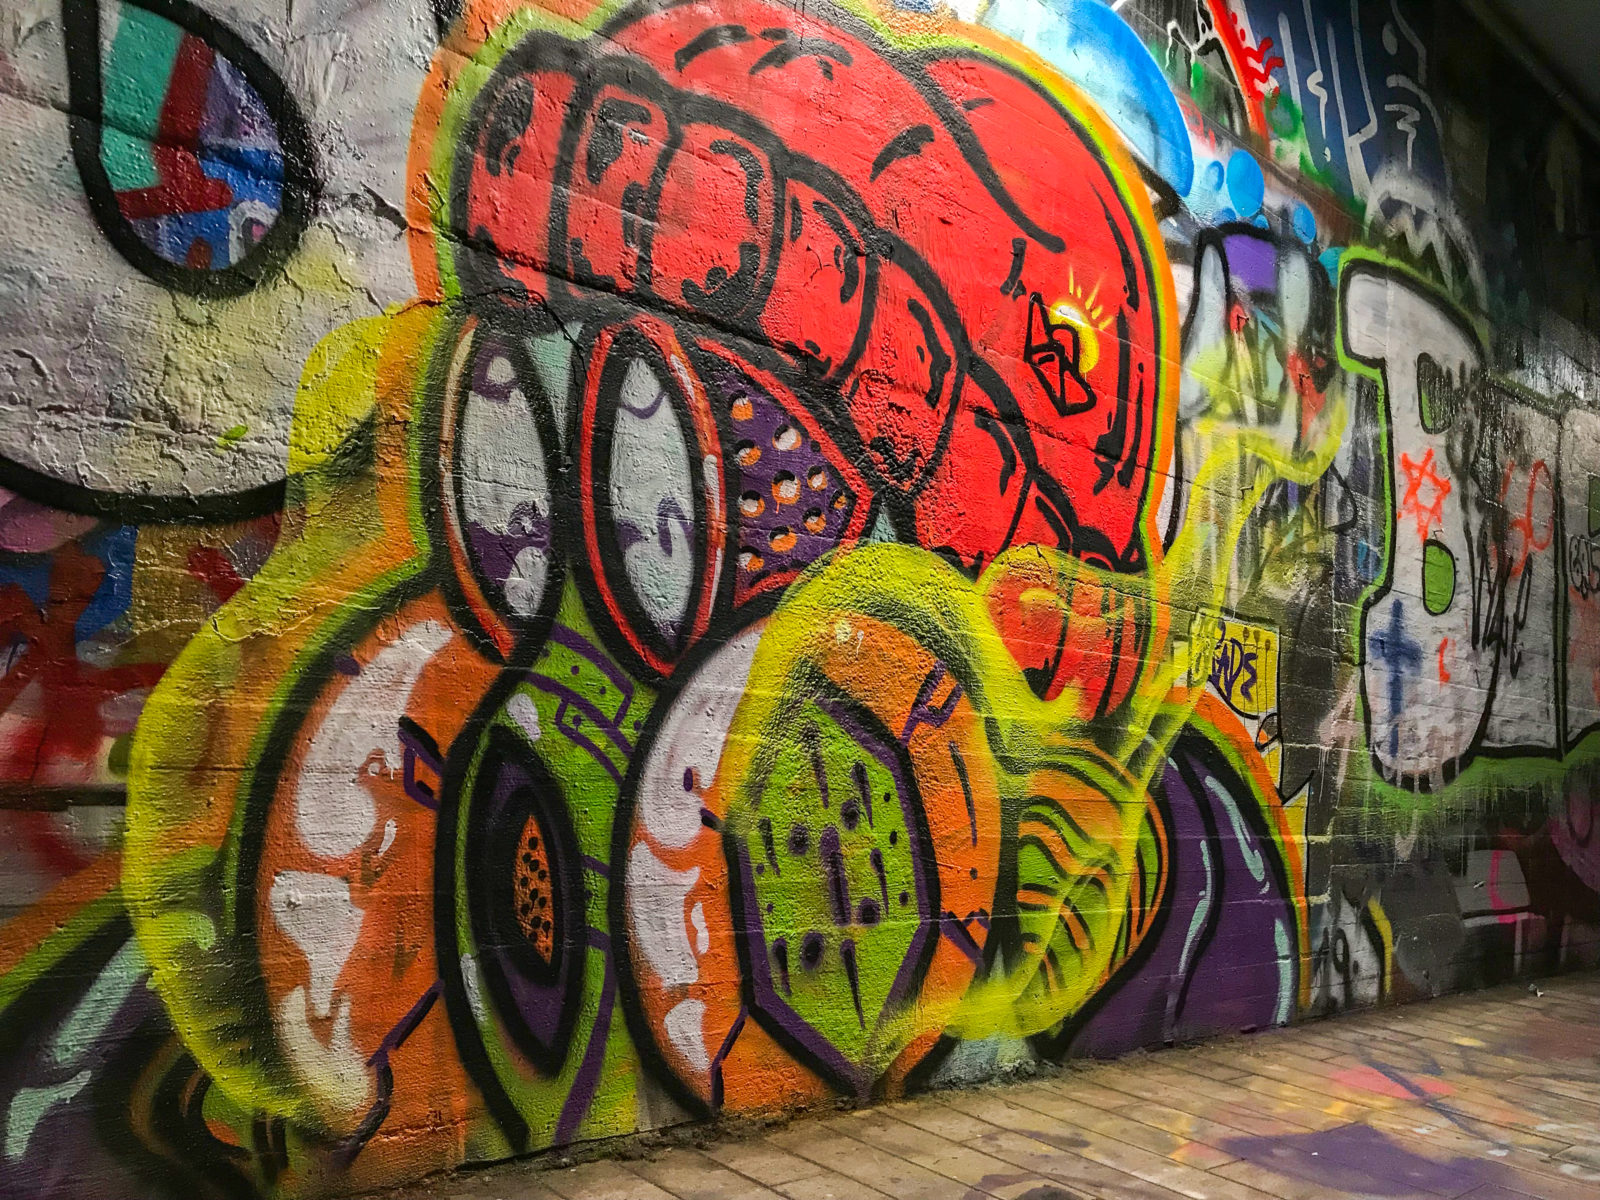 Student Spreads Mental Health Awareness Through Graffiti The Emory Wheel